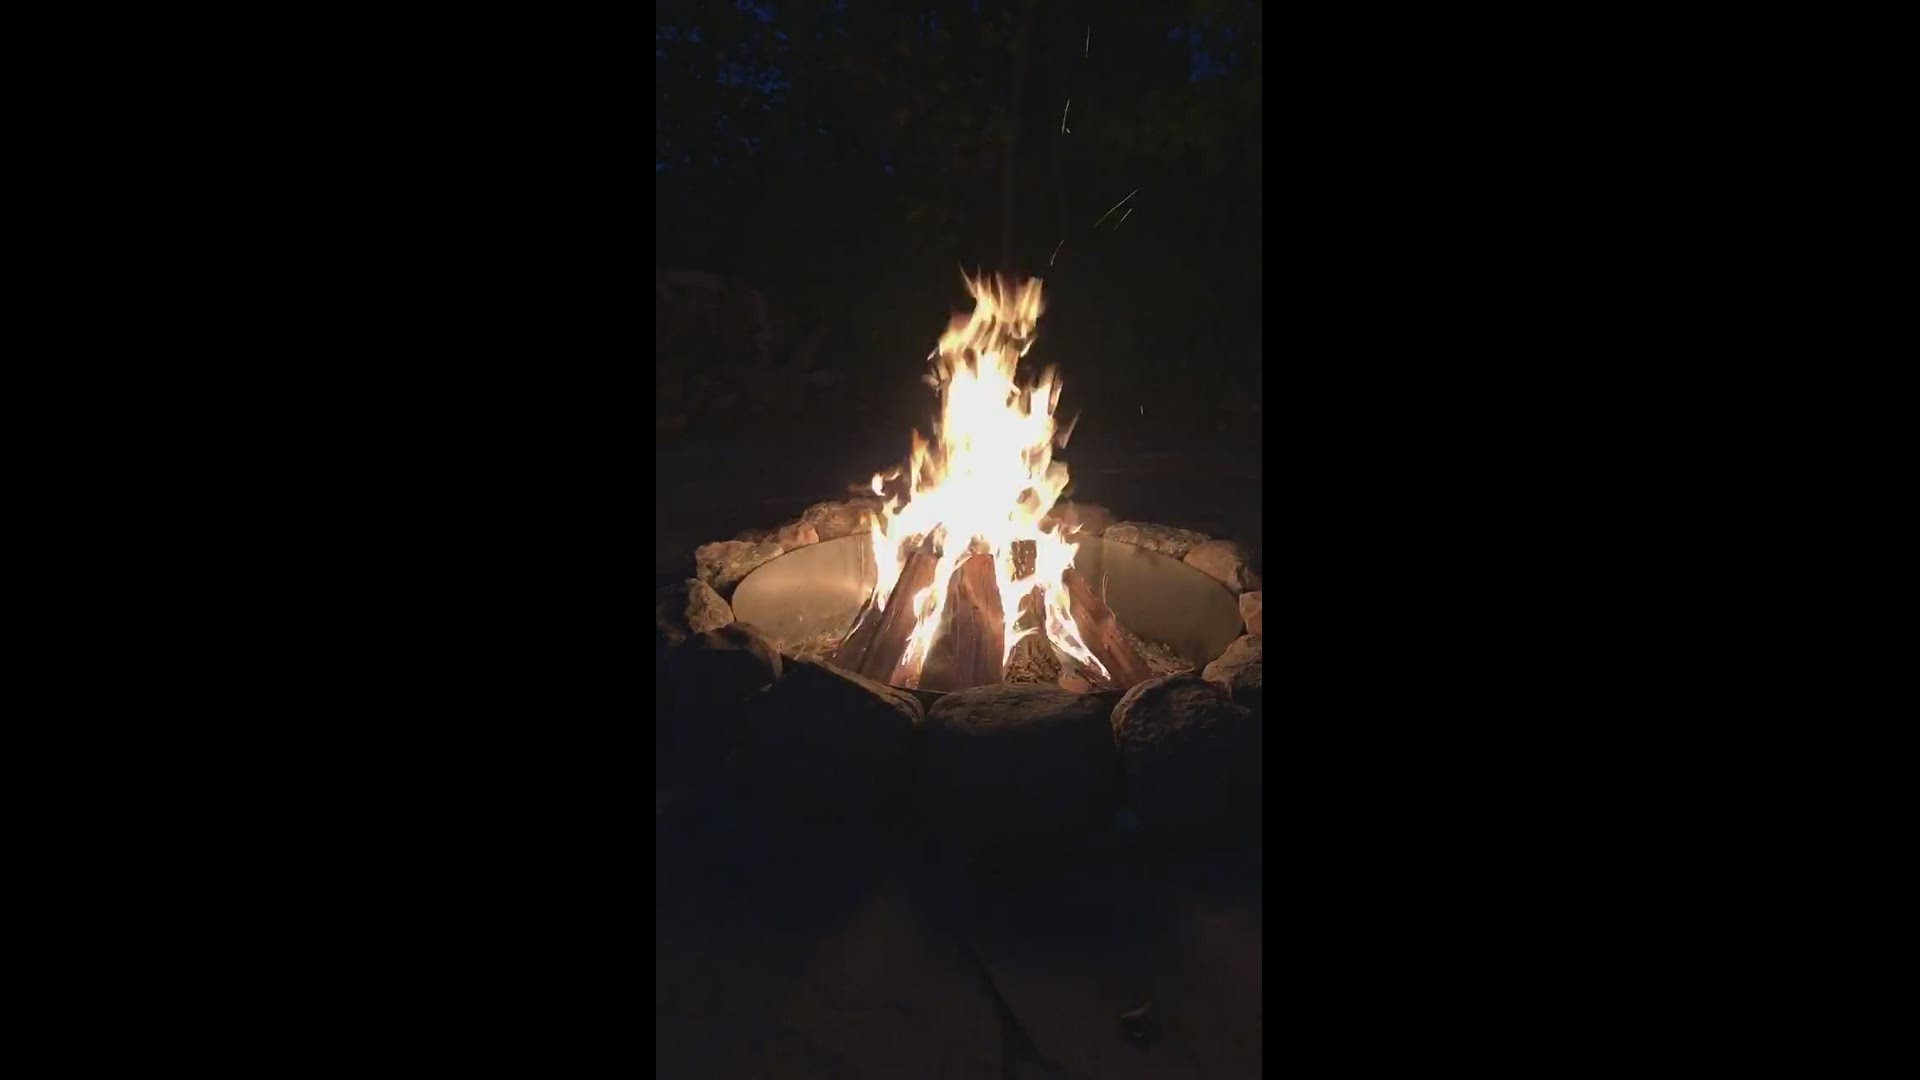 Perfect night for a bonfire!
Credit: Martha Cummings